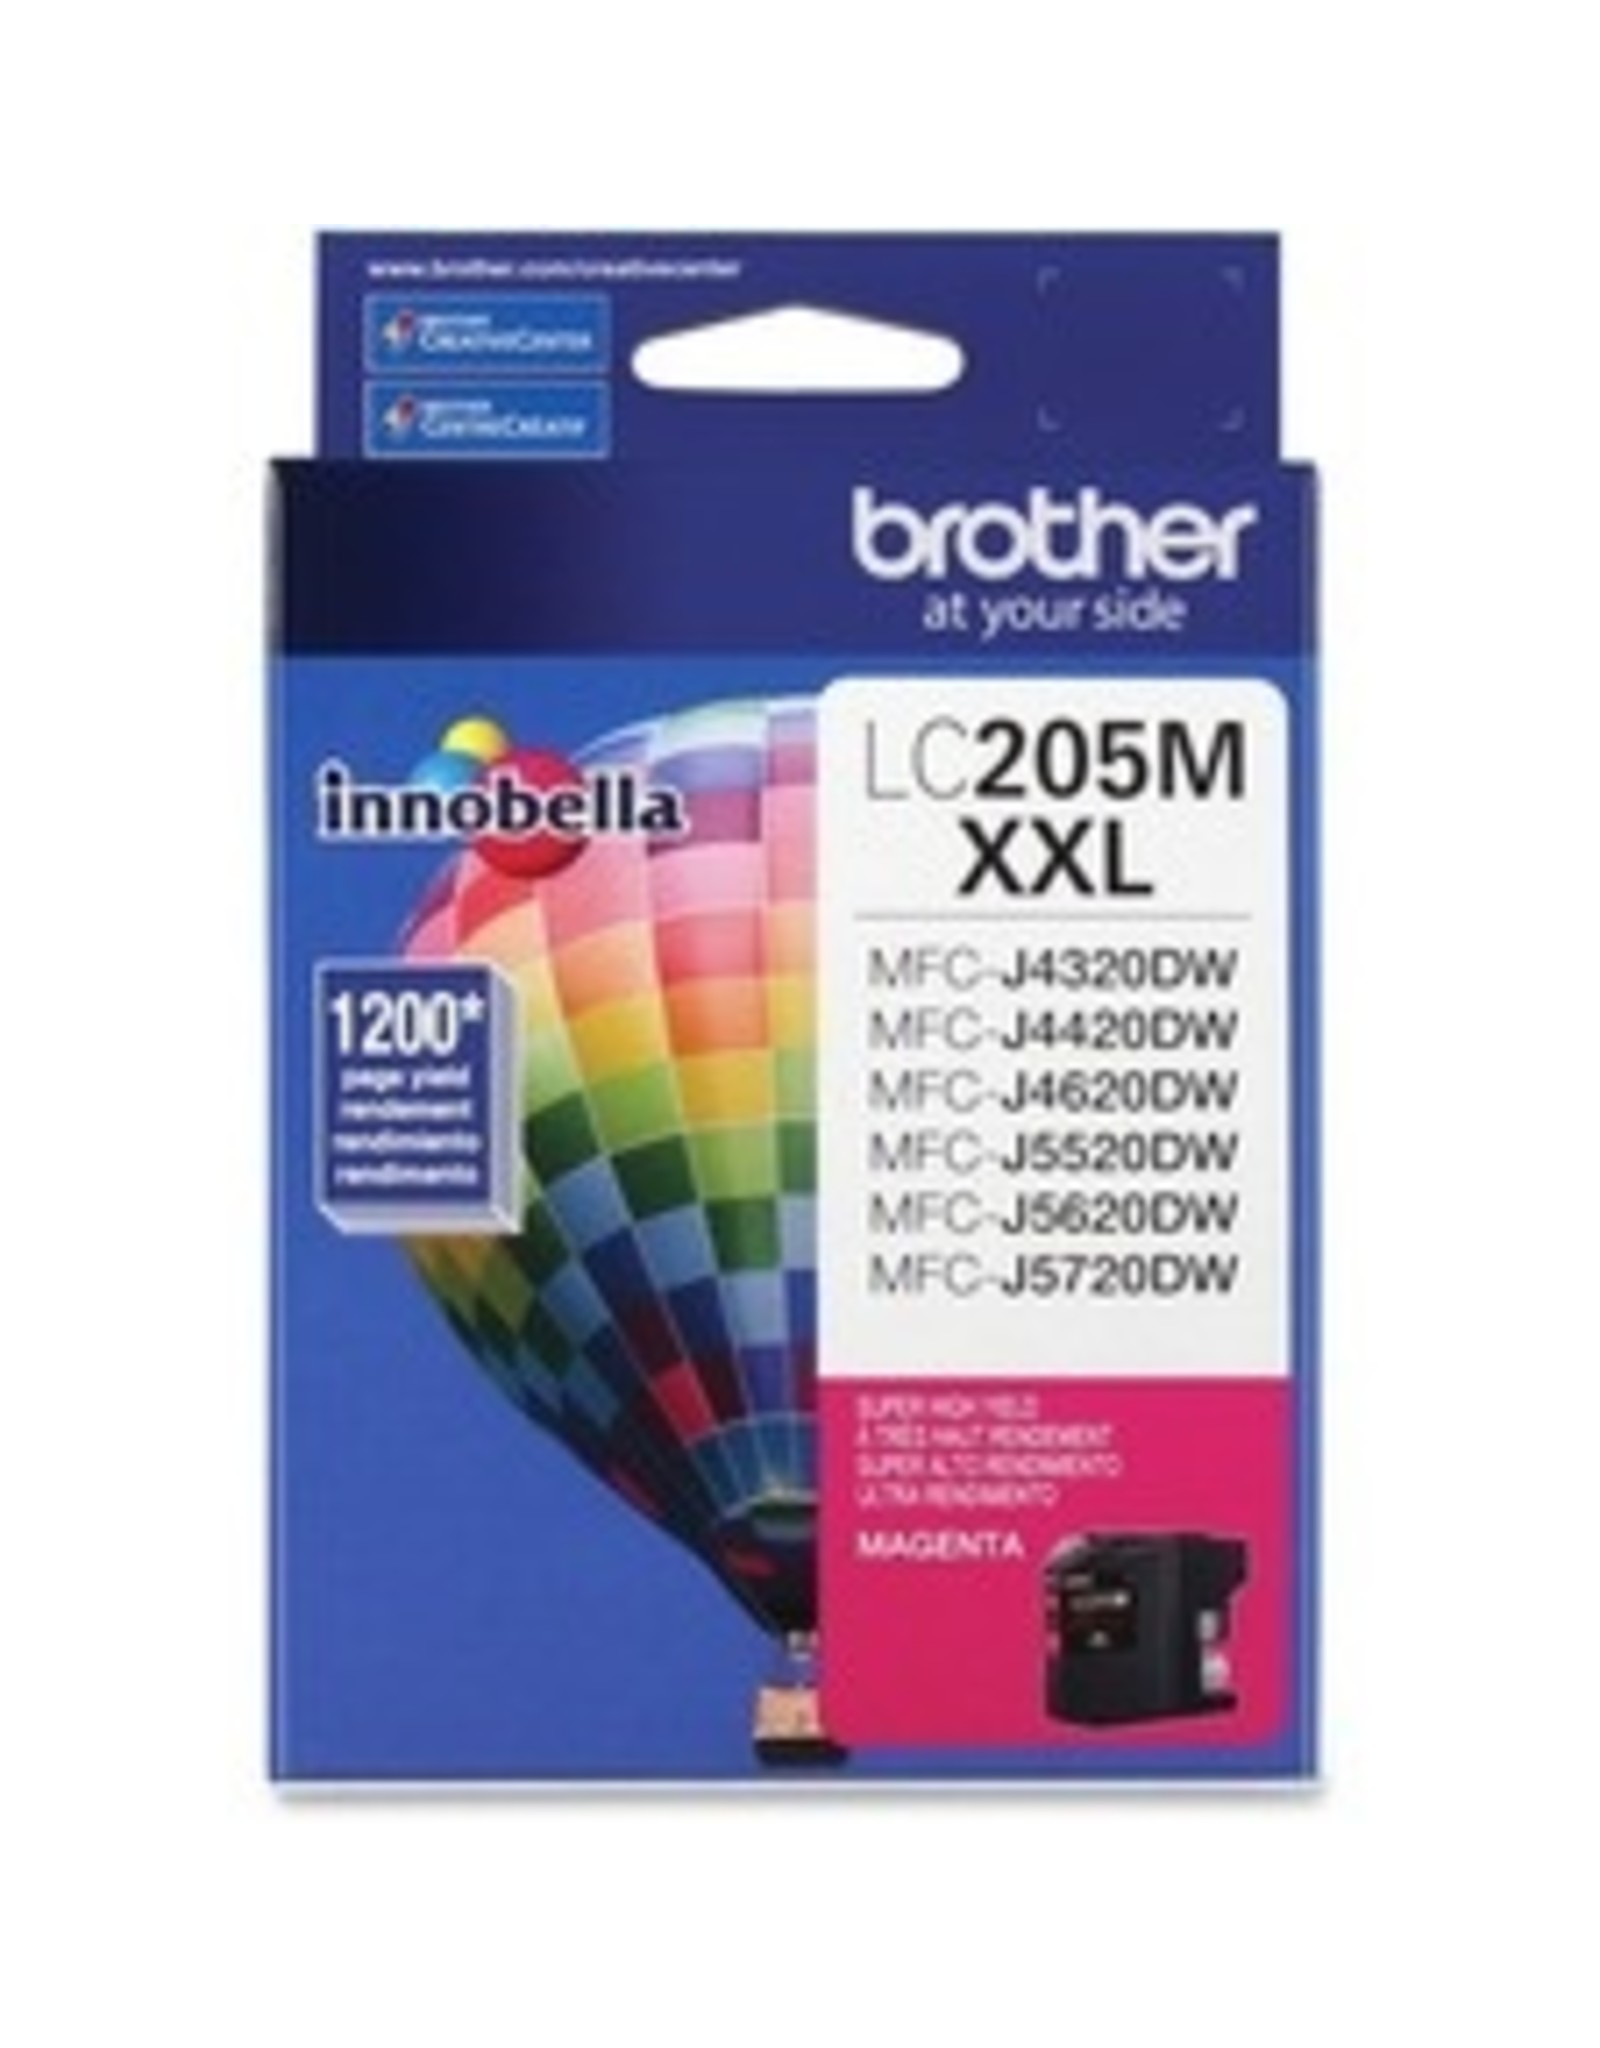 Brother Brother Innobella LC205MS Original Ink Cartridge - Magenta